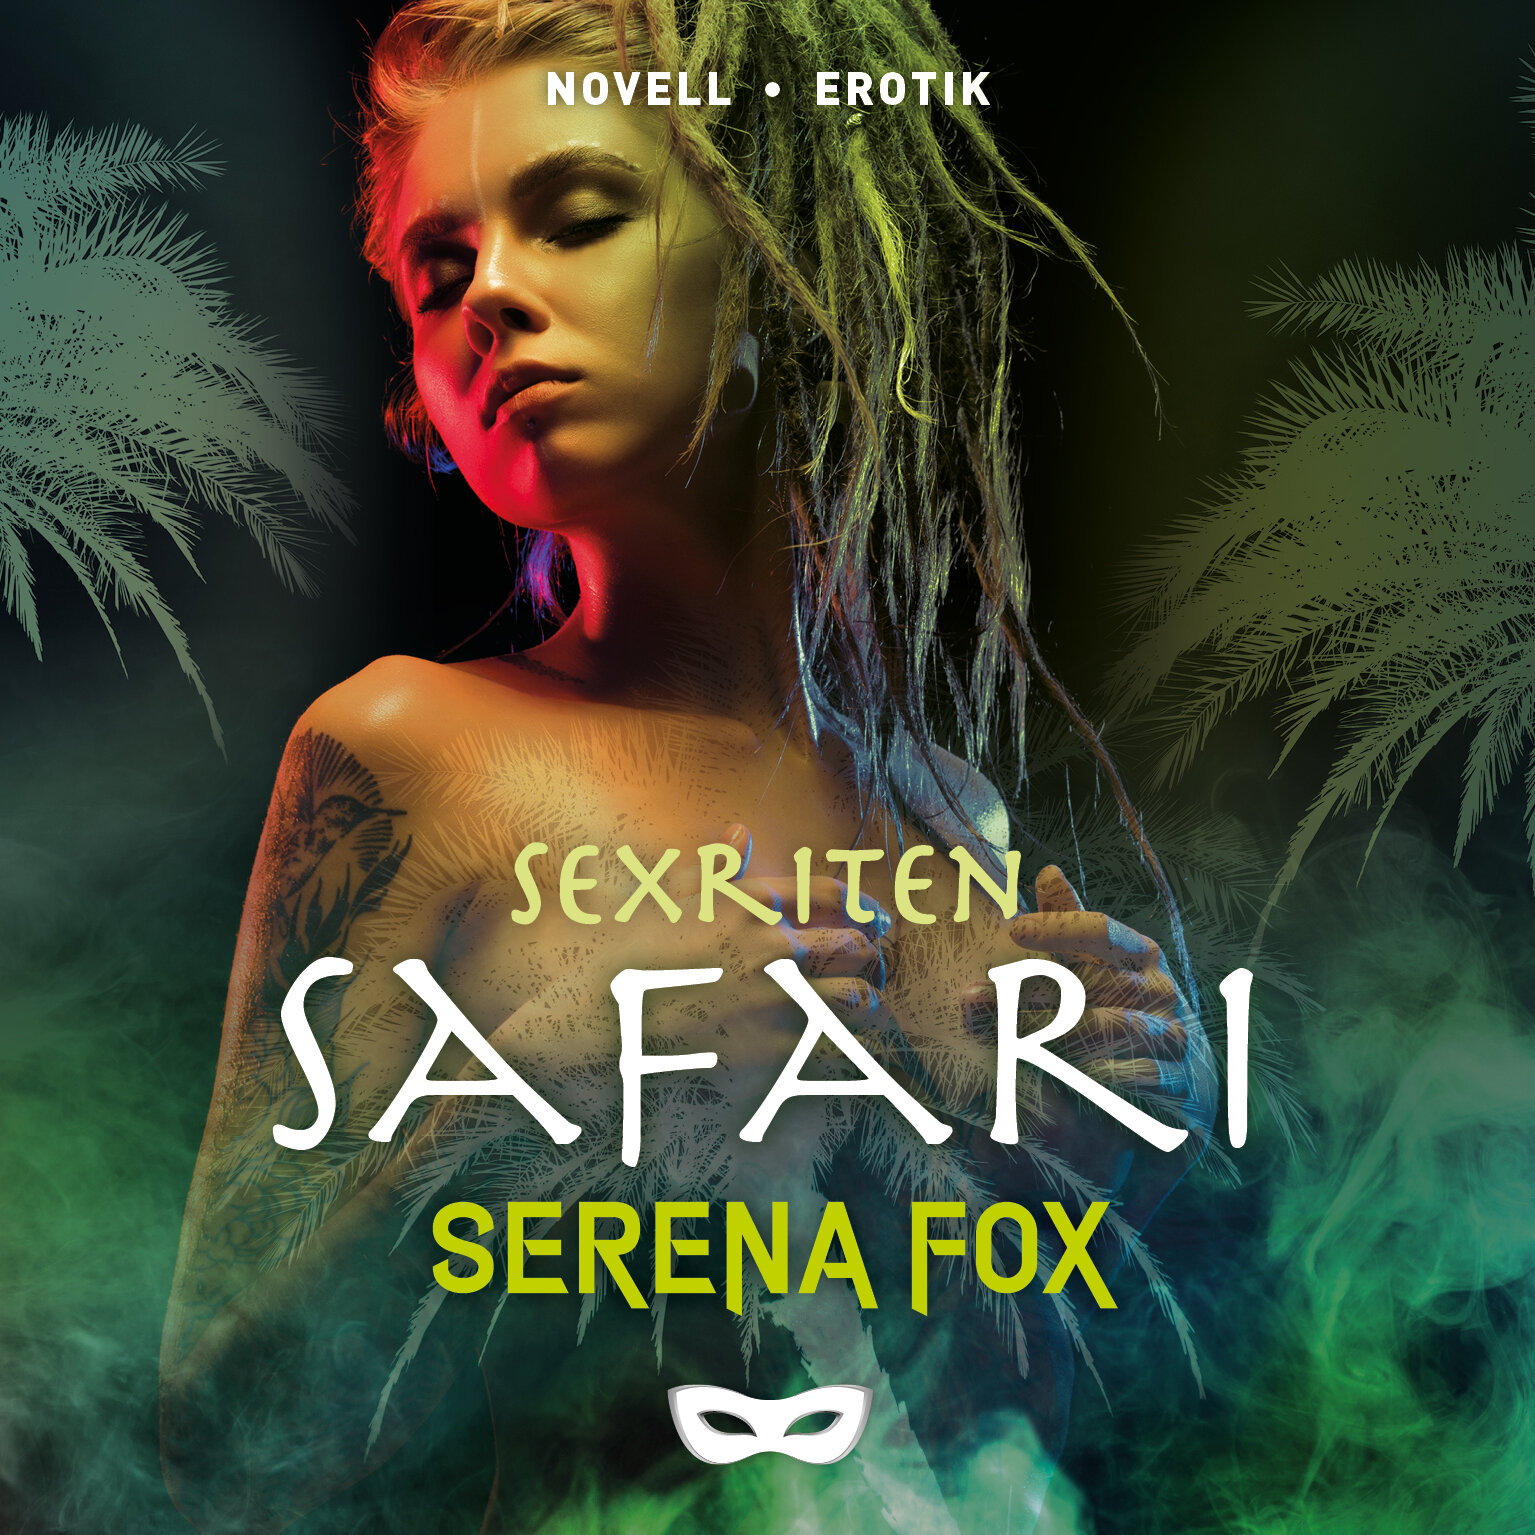 RITEN1 Serena Fox Sexriten Safari omslag audio.jpg